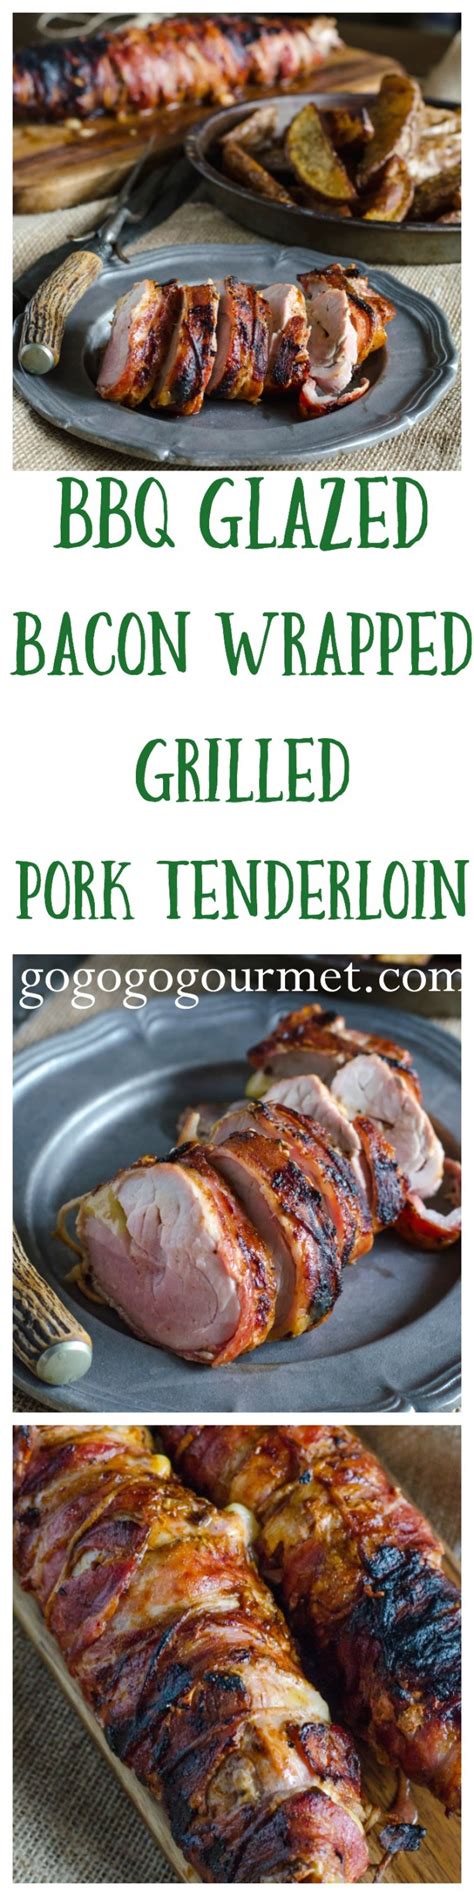 bbq bacon wrapped pork tenderloin go go go gourmet